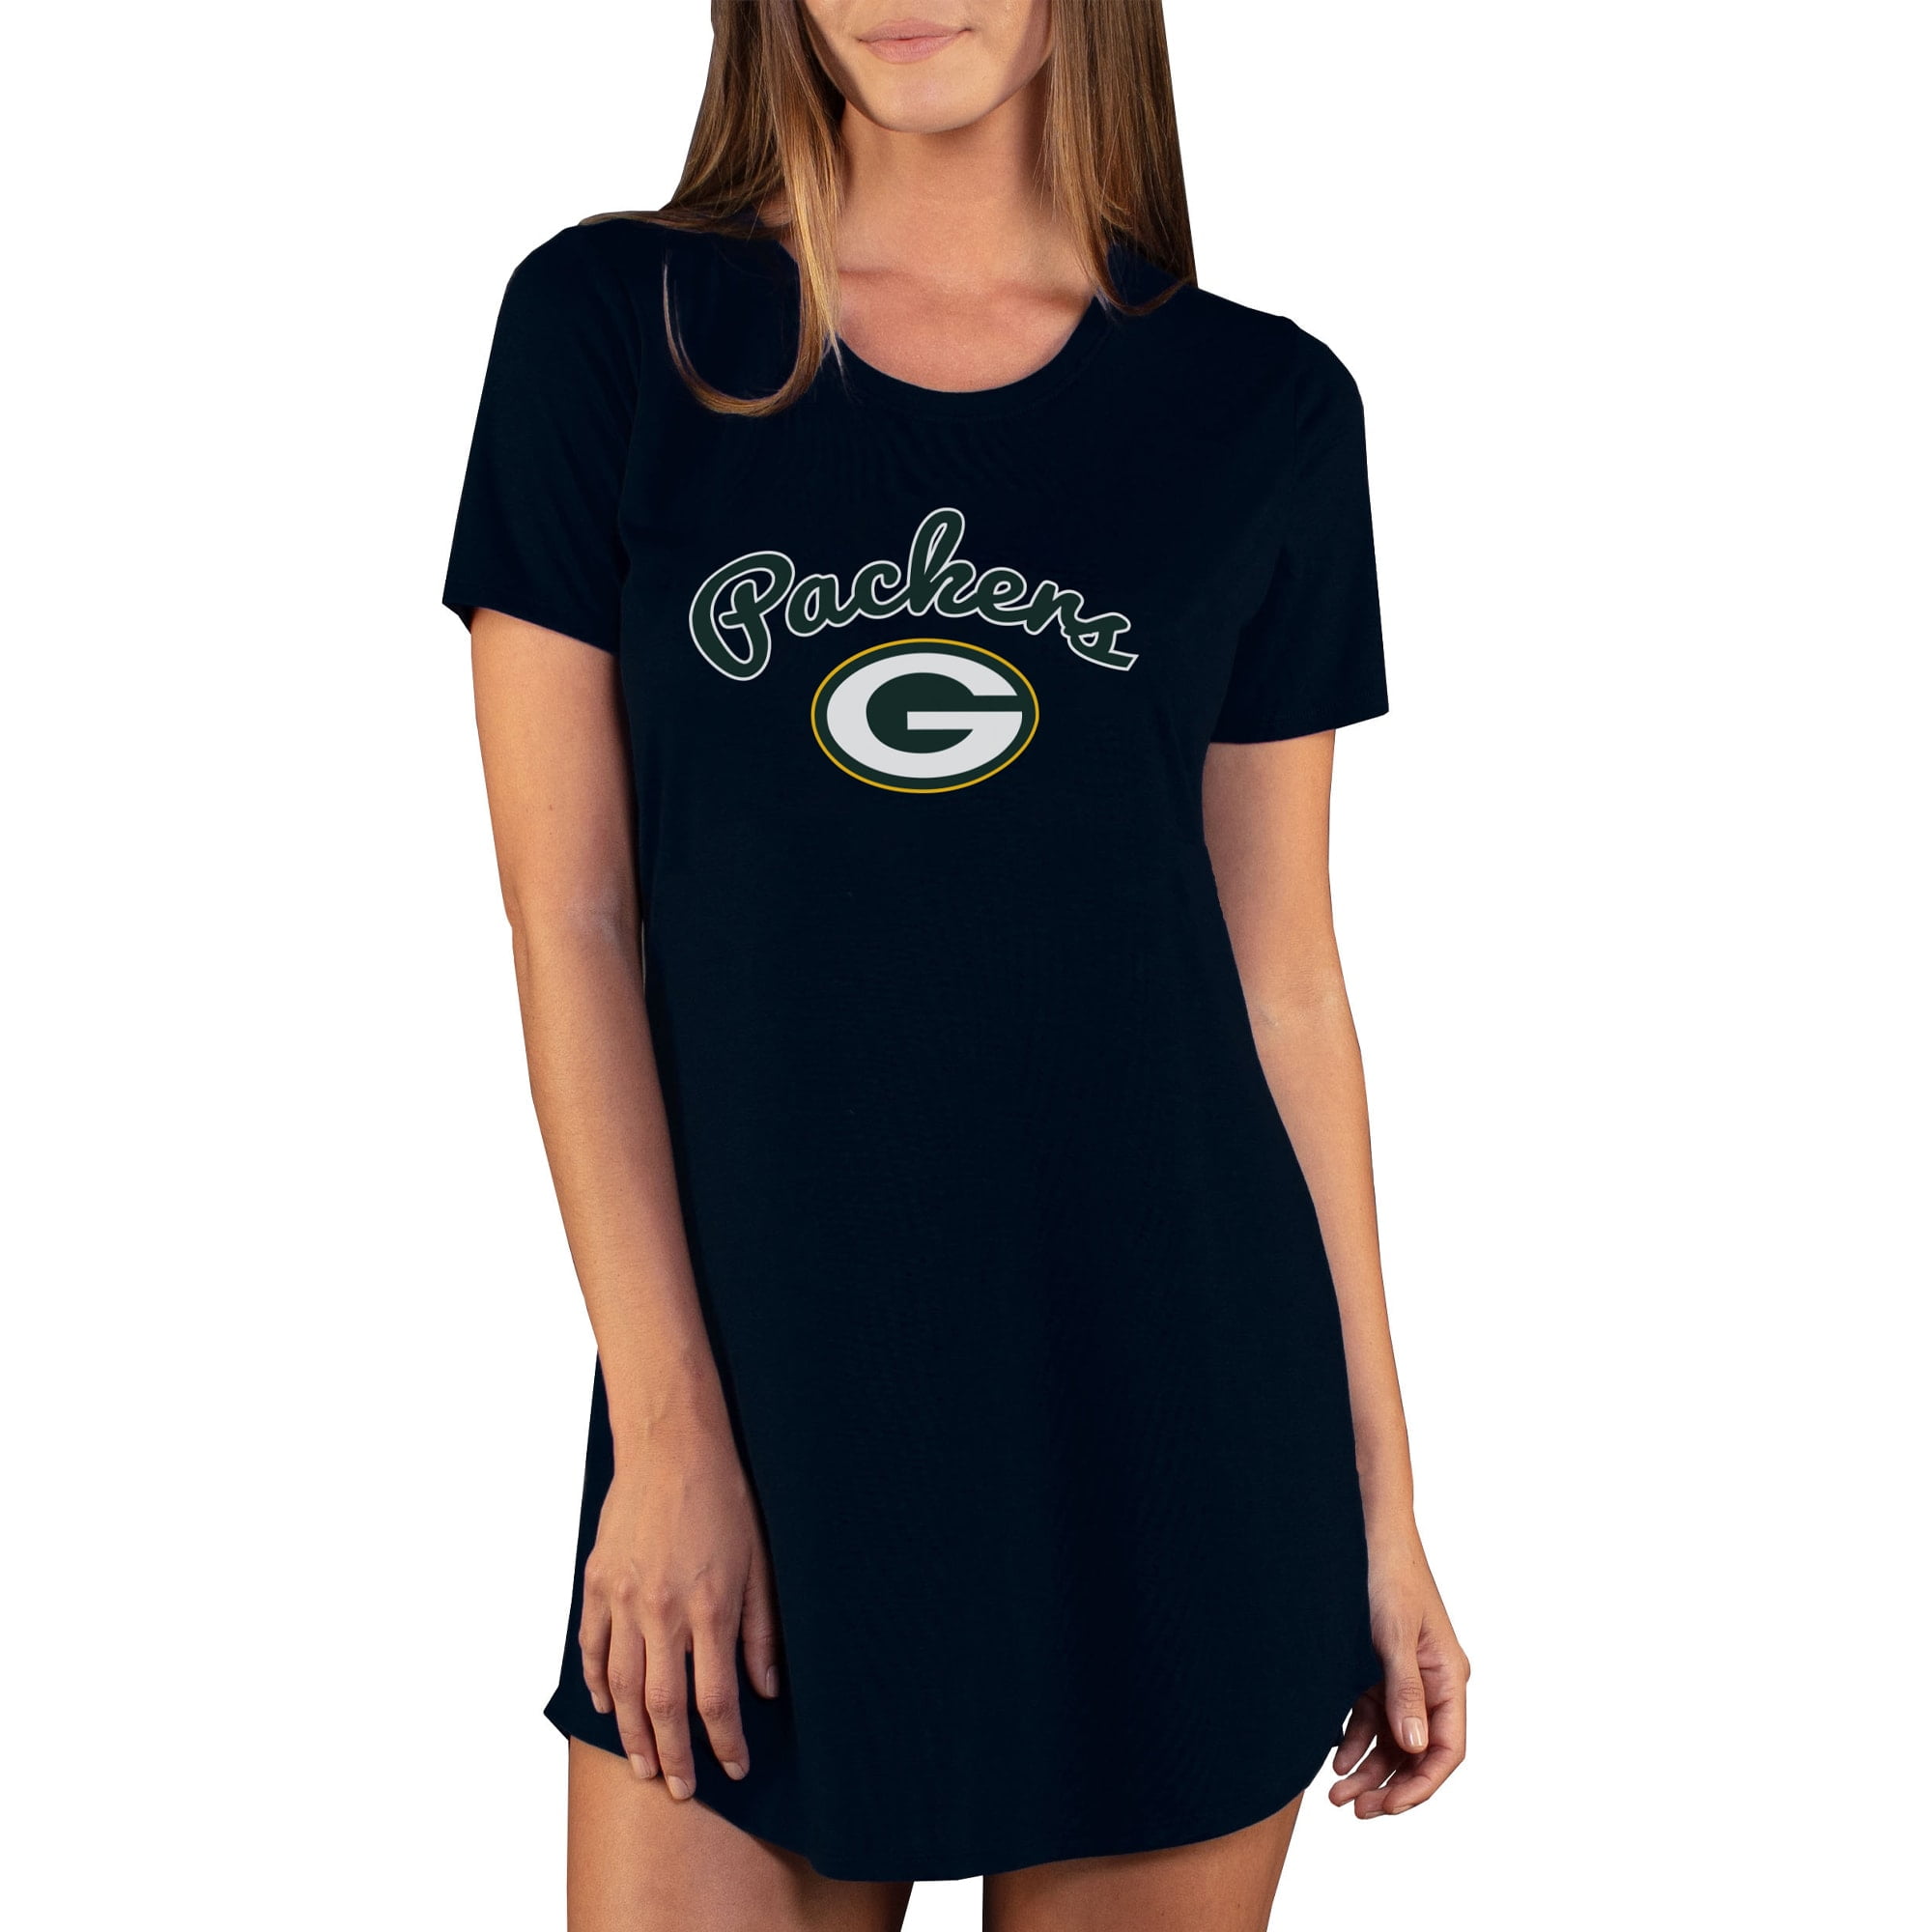 Women's New Era Midnight Green/White Philadelphia Eagles Plus Size Athletic  Varsity Lace-Up Long Sleeve T-Shirt